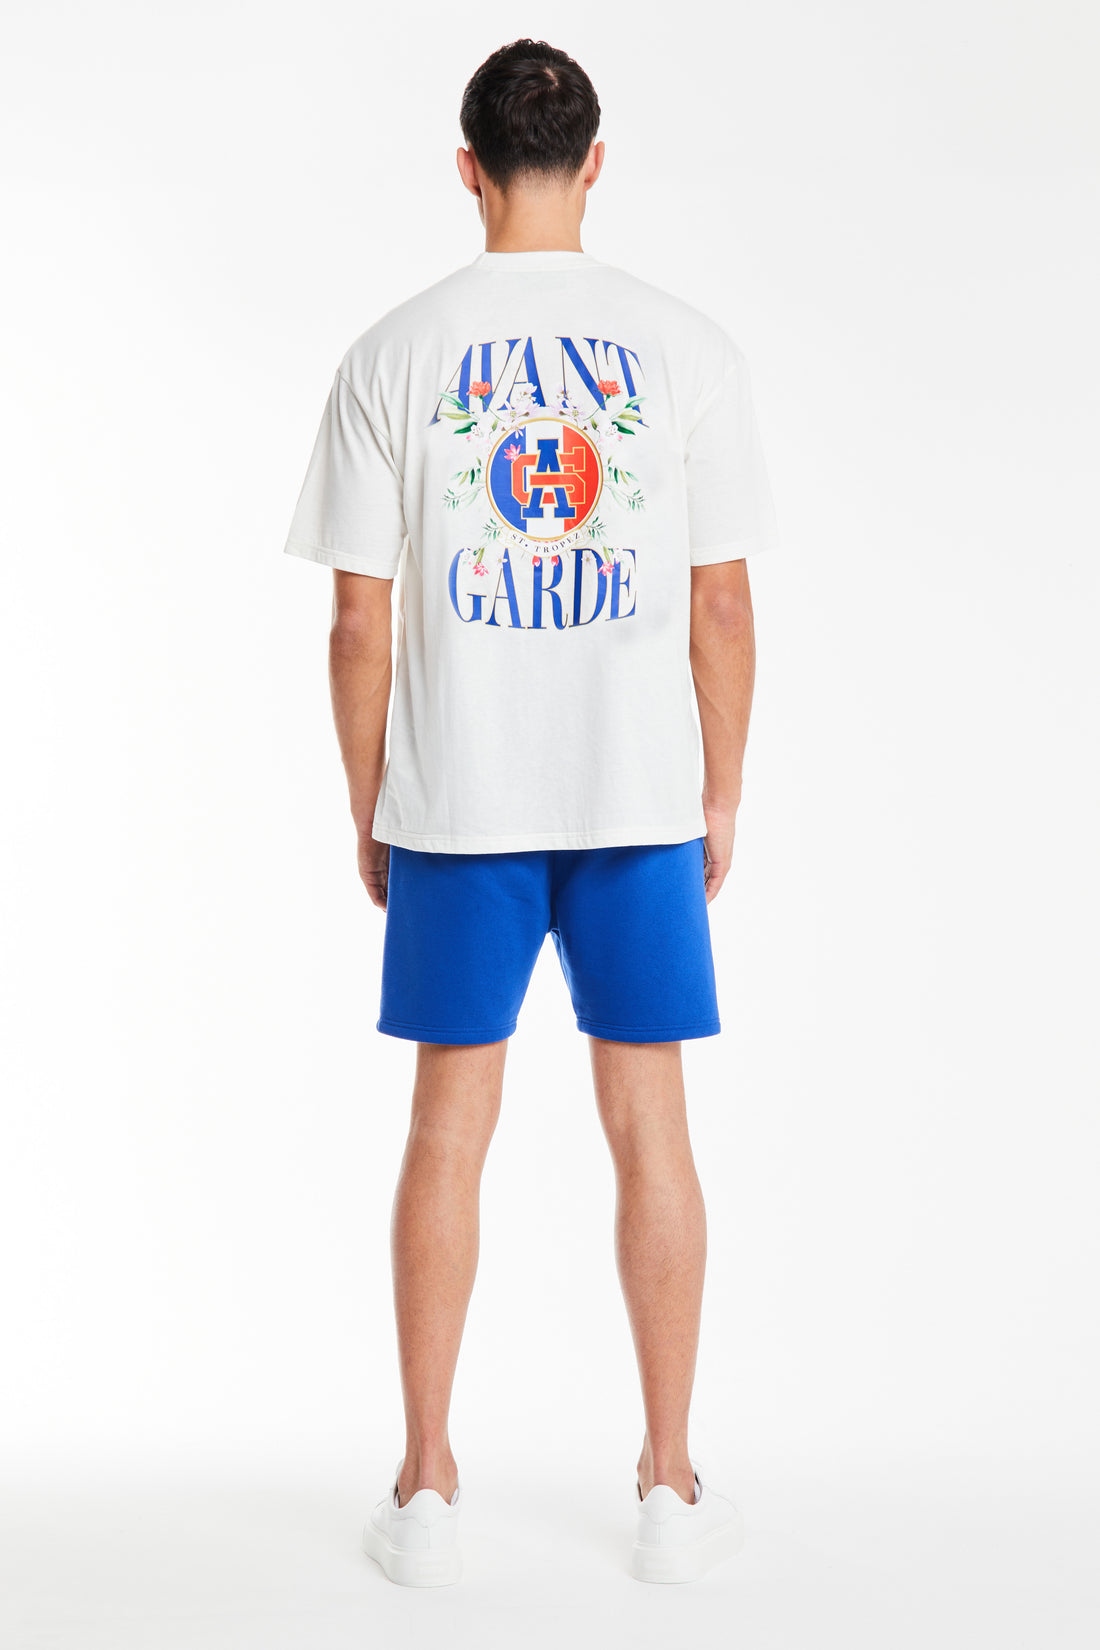 back profile of mens t shirt sale showing 'Avant Garde' logo